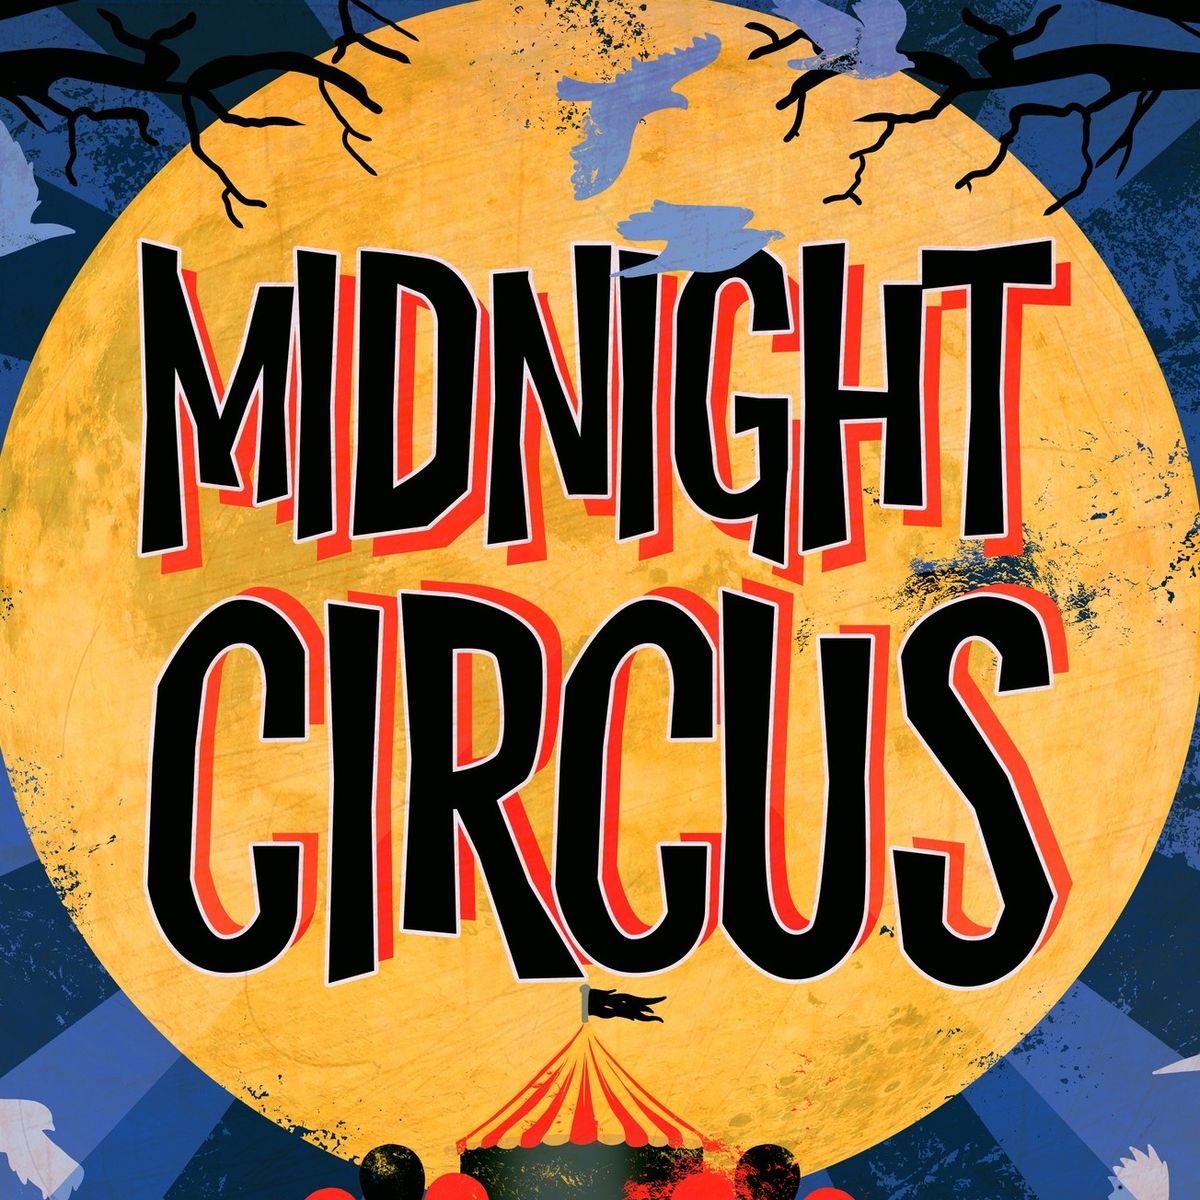 Midnight Circus - Stramash